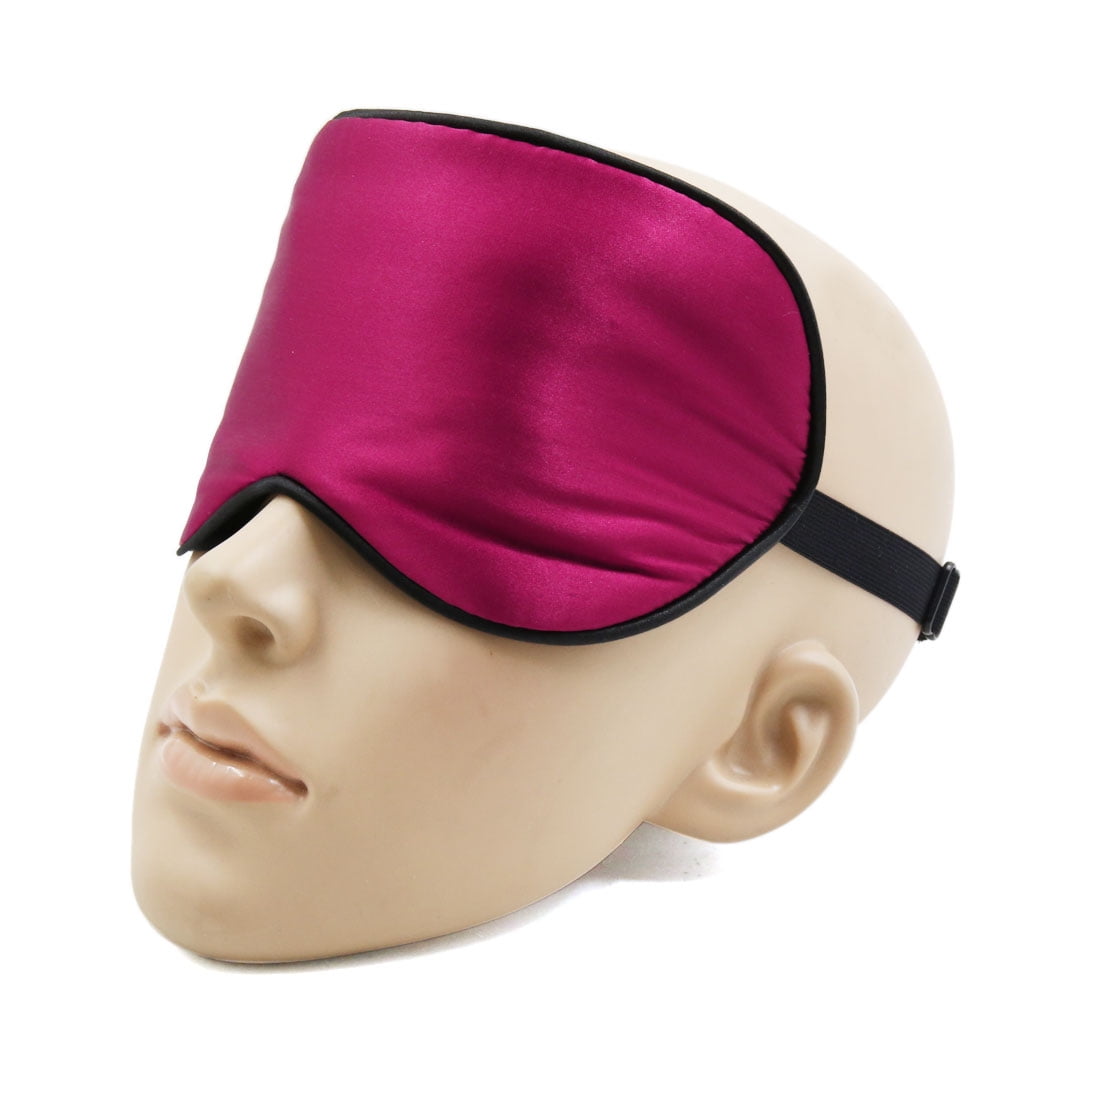 Popeye face handmade blindfold blindfolds eye eyes slumber sleep sleeping  mask masks cover pillow shade wear eyemask eyeshade gift present